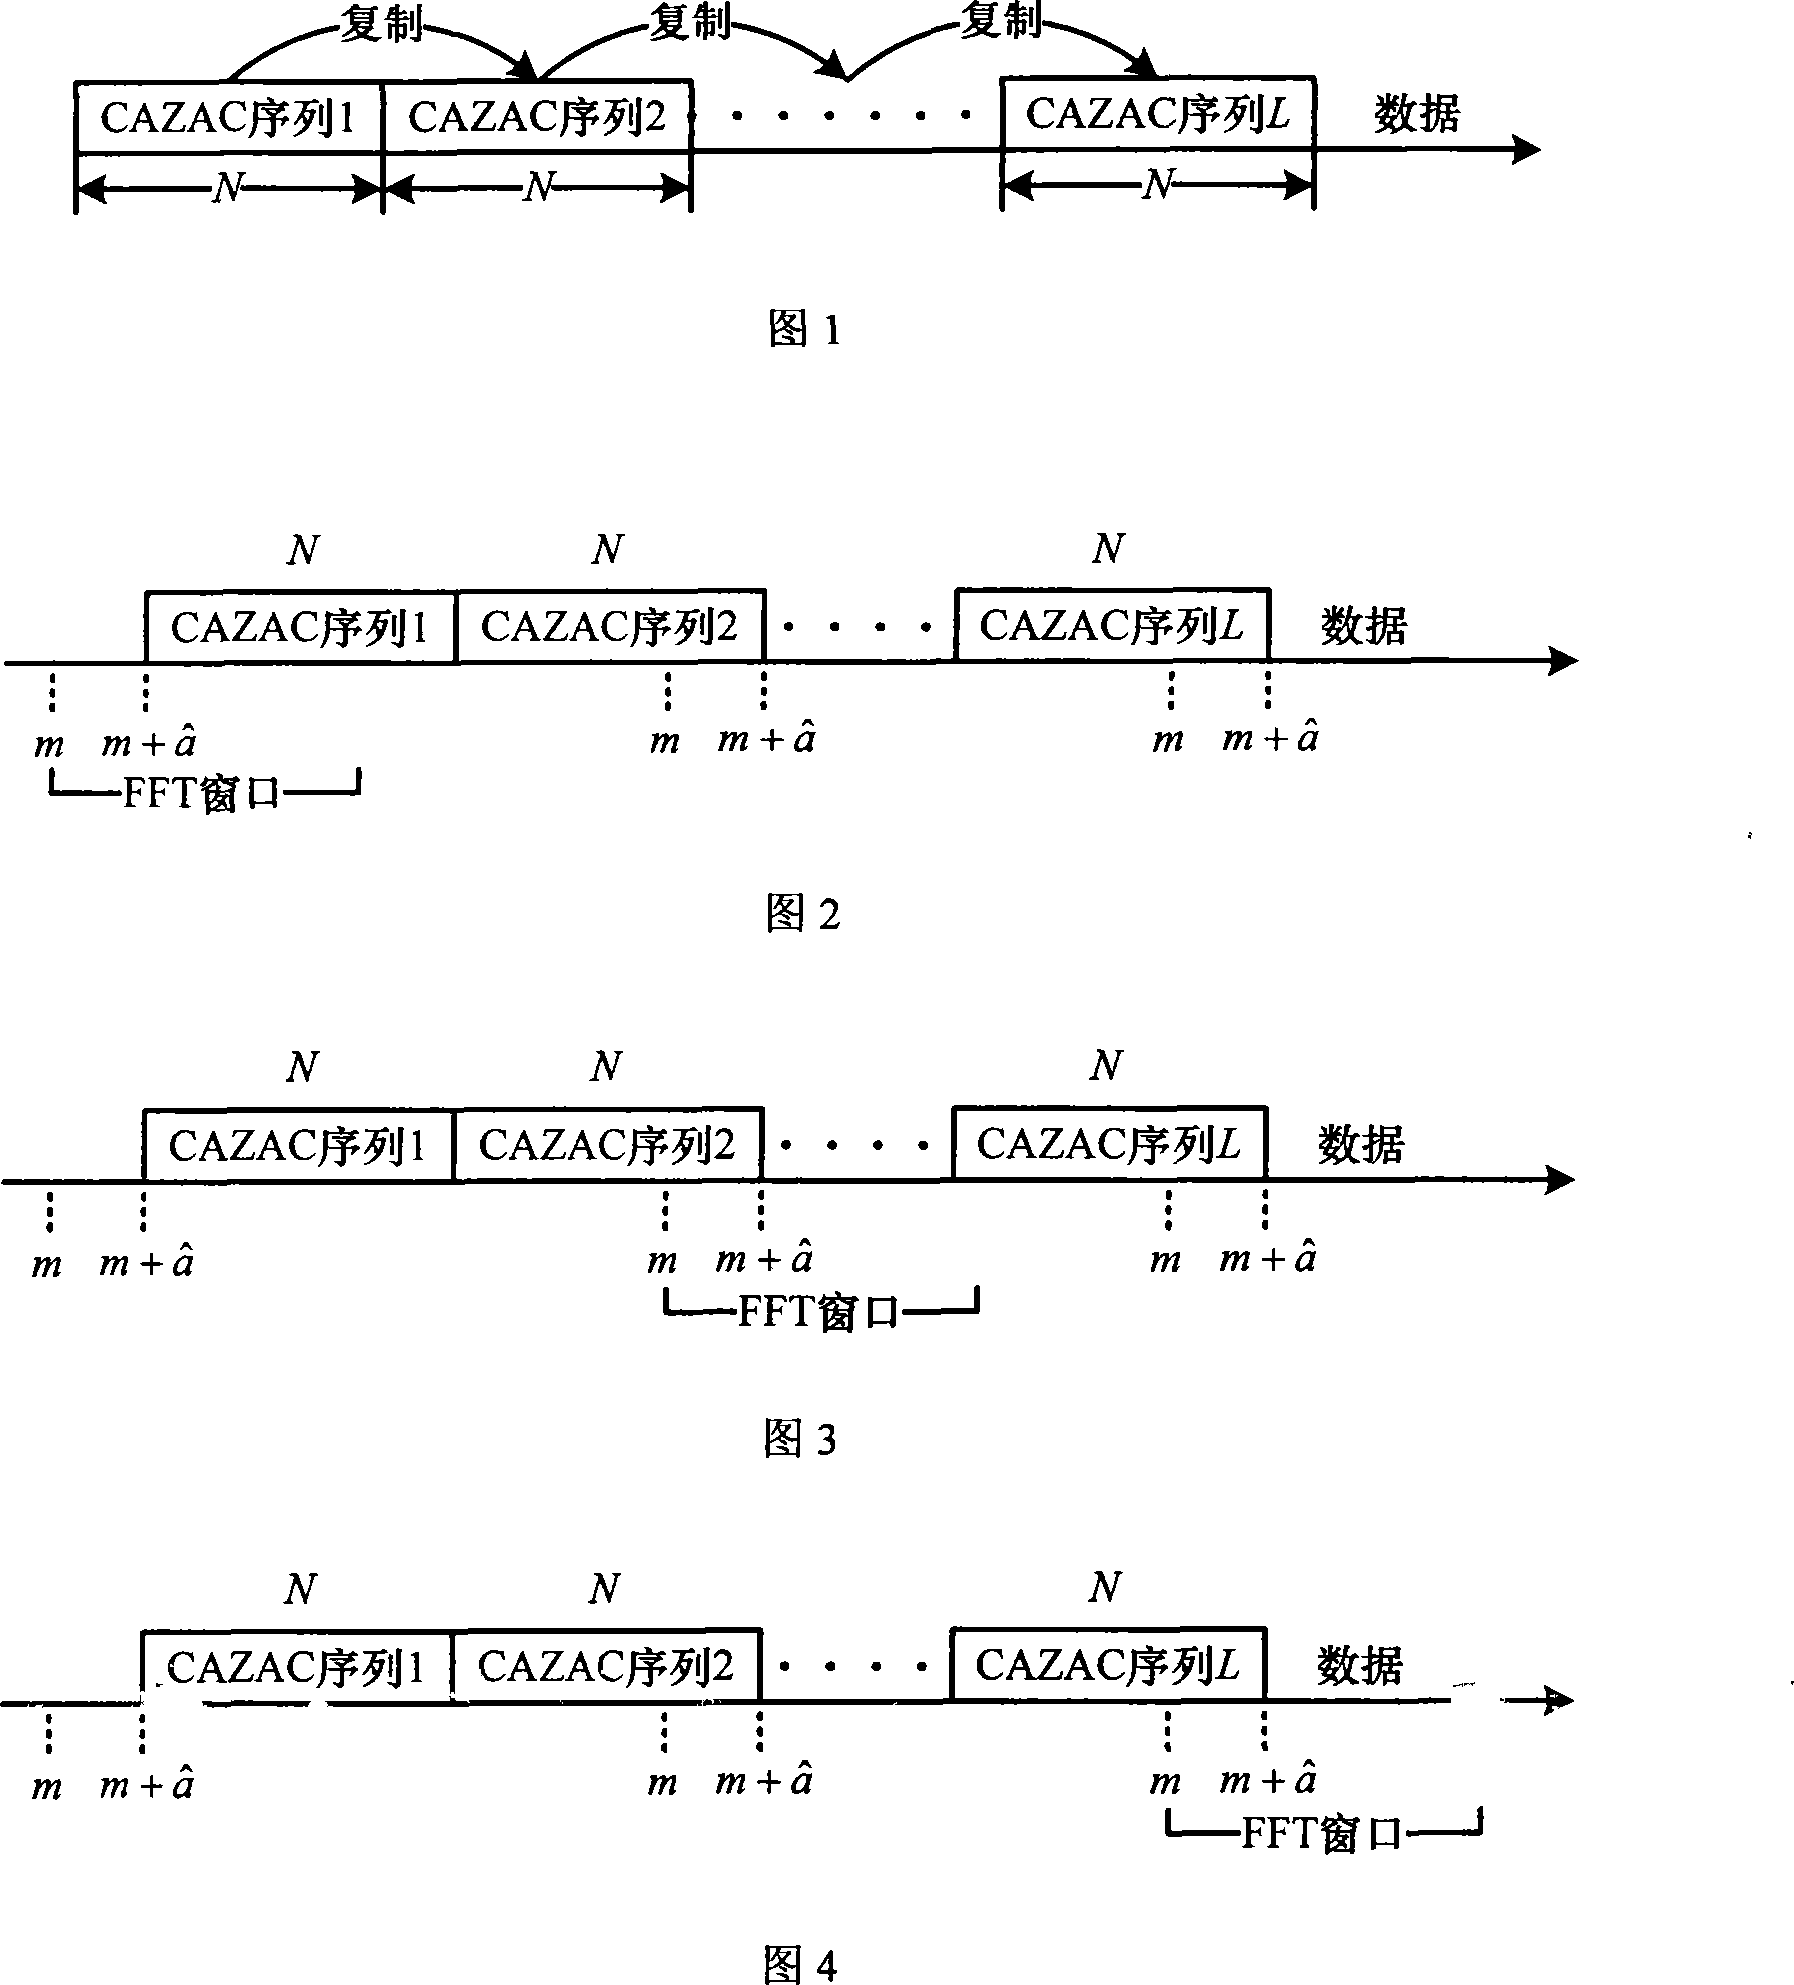 A frame synchronization method